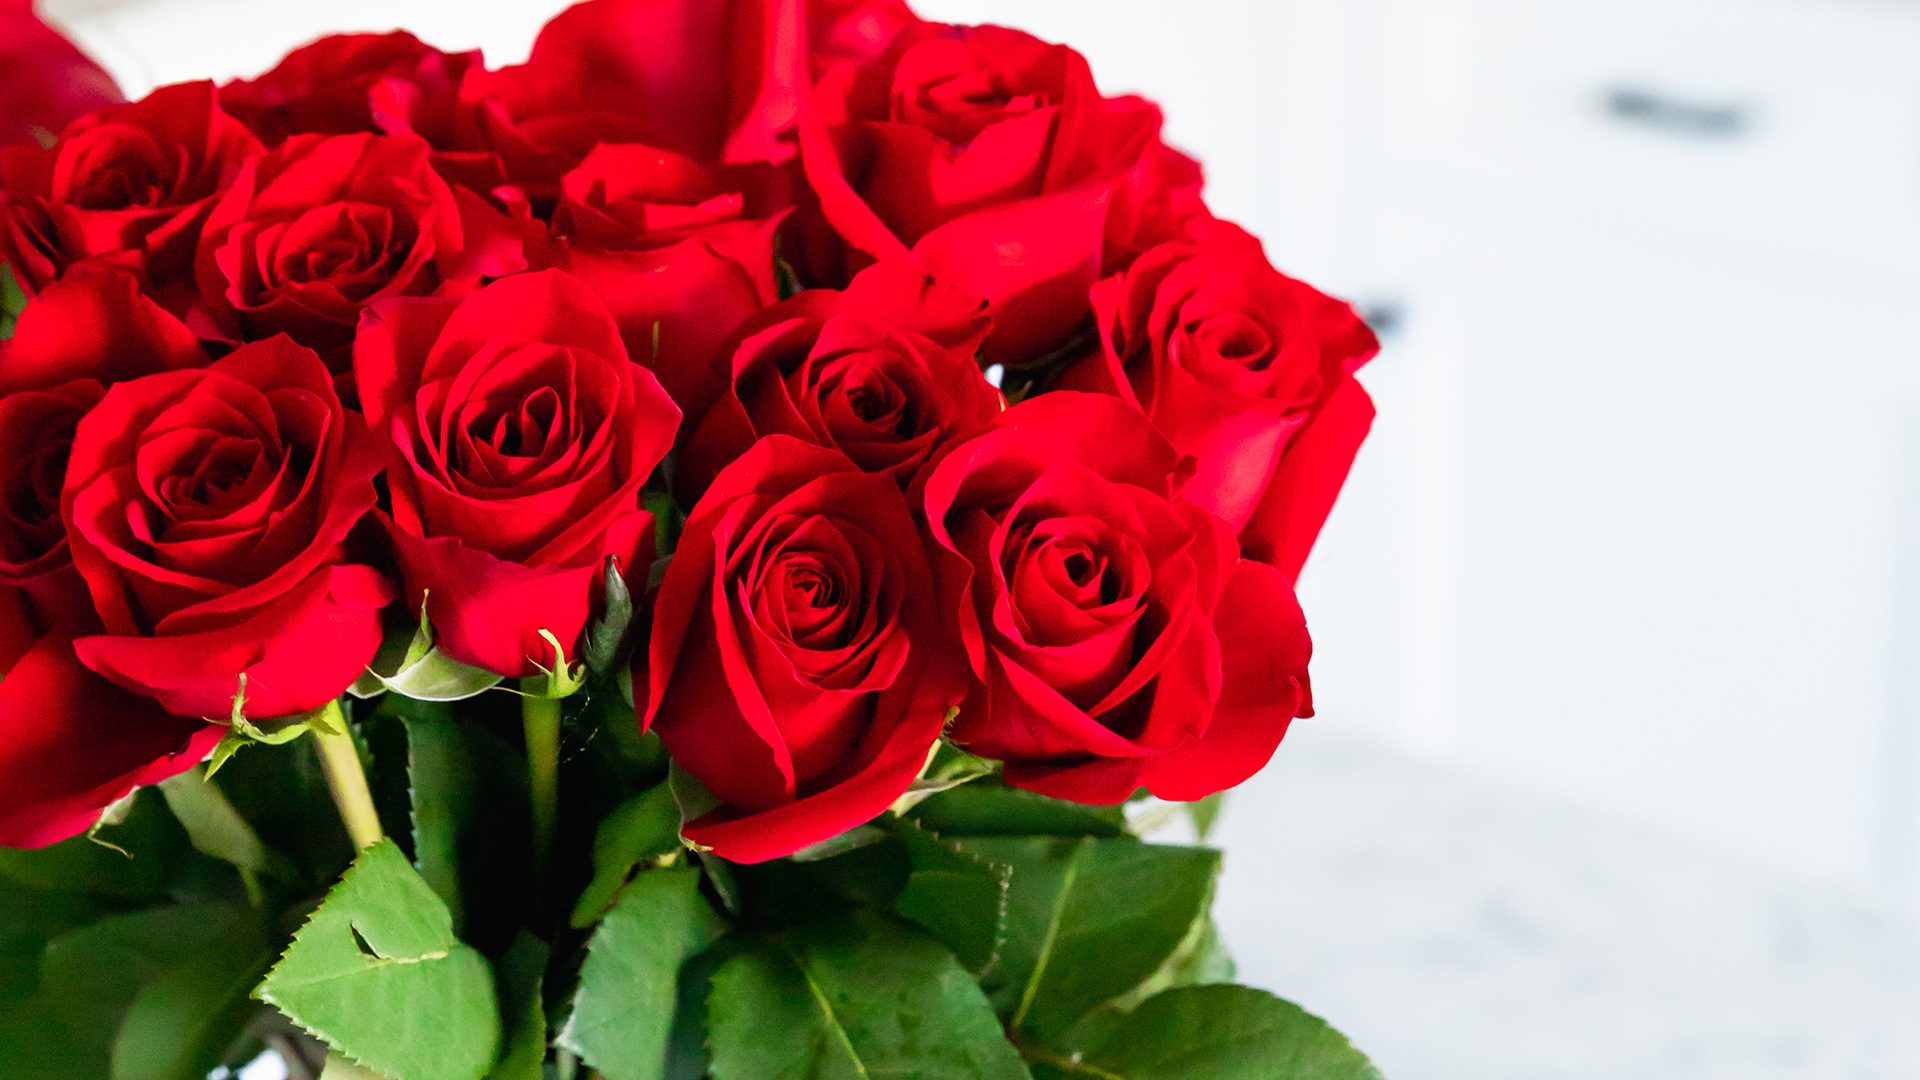 ### Valentine's Roses ###